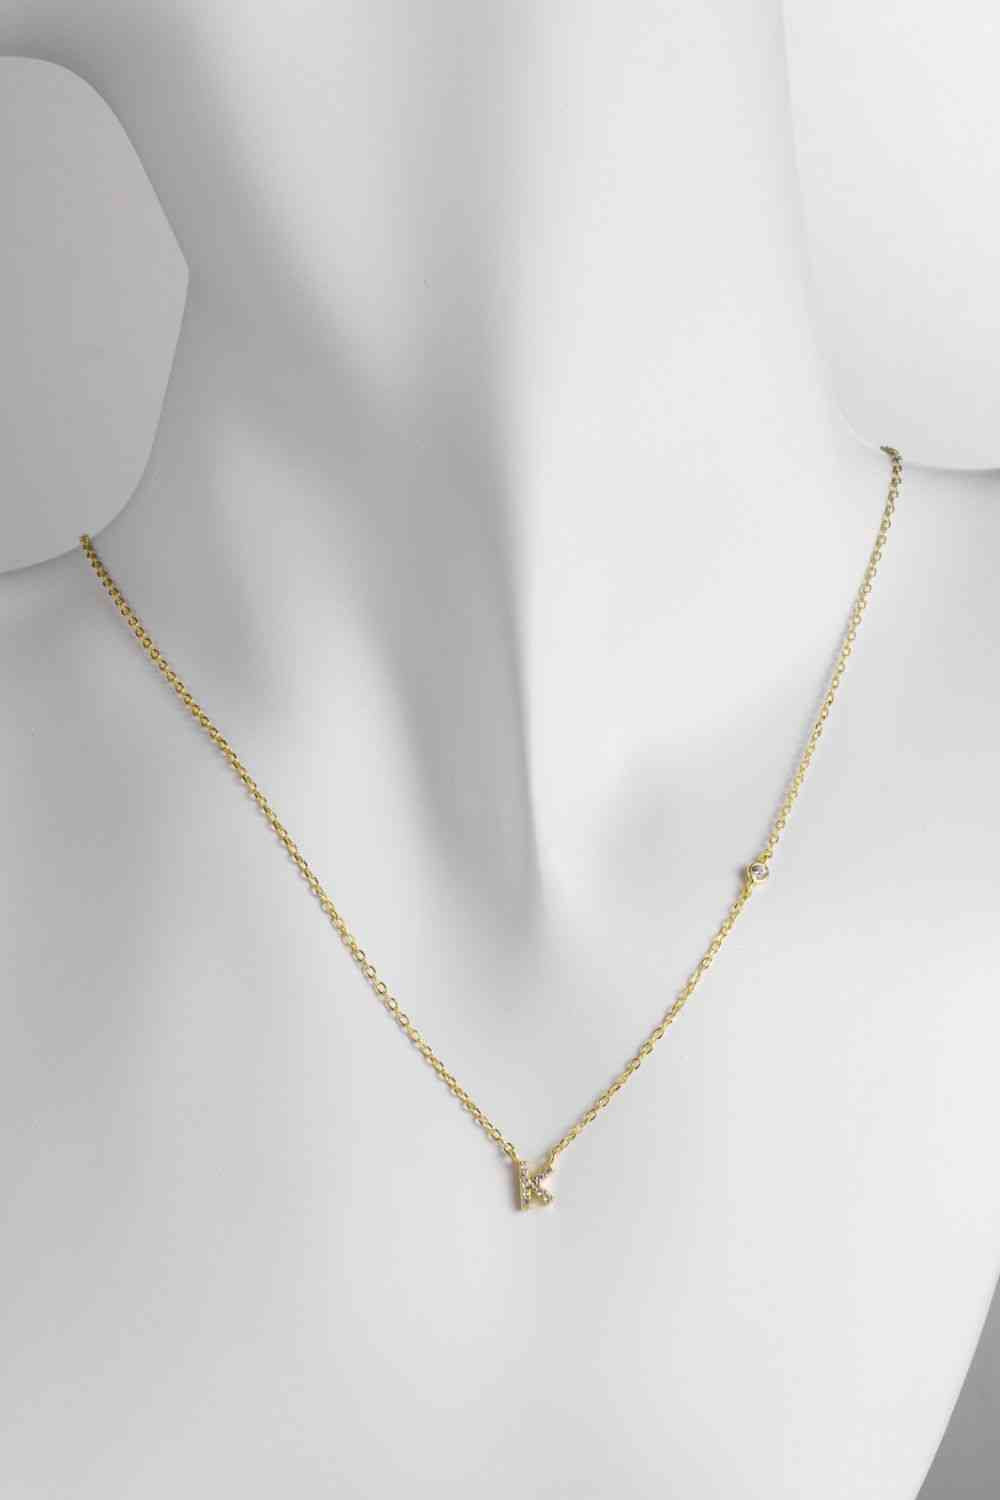 G To K Zircon 925 Sterling Silver Necklace - Pahabu - Women Fashion & Jewelry